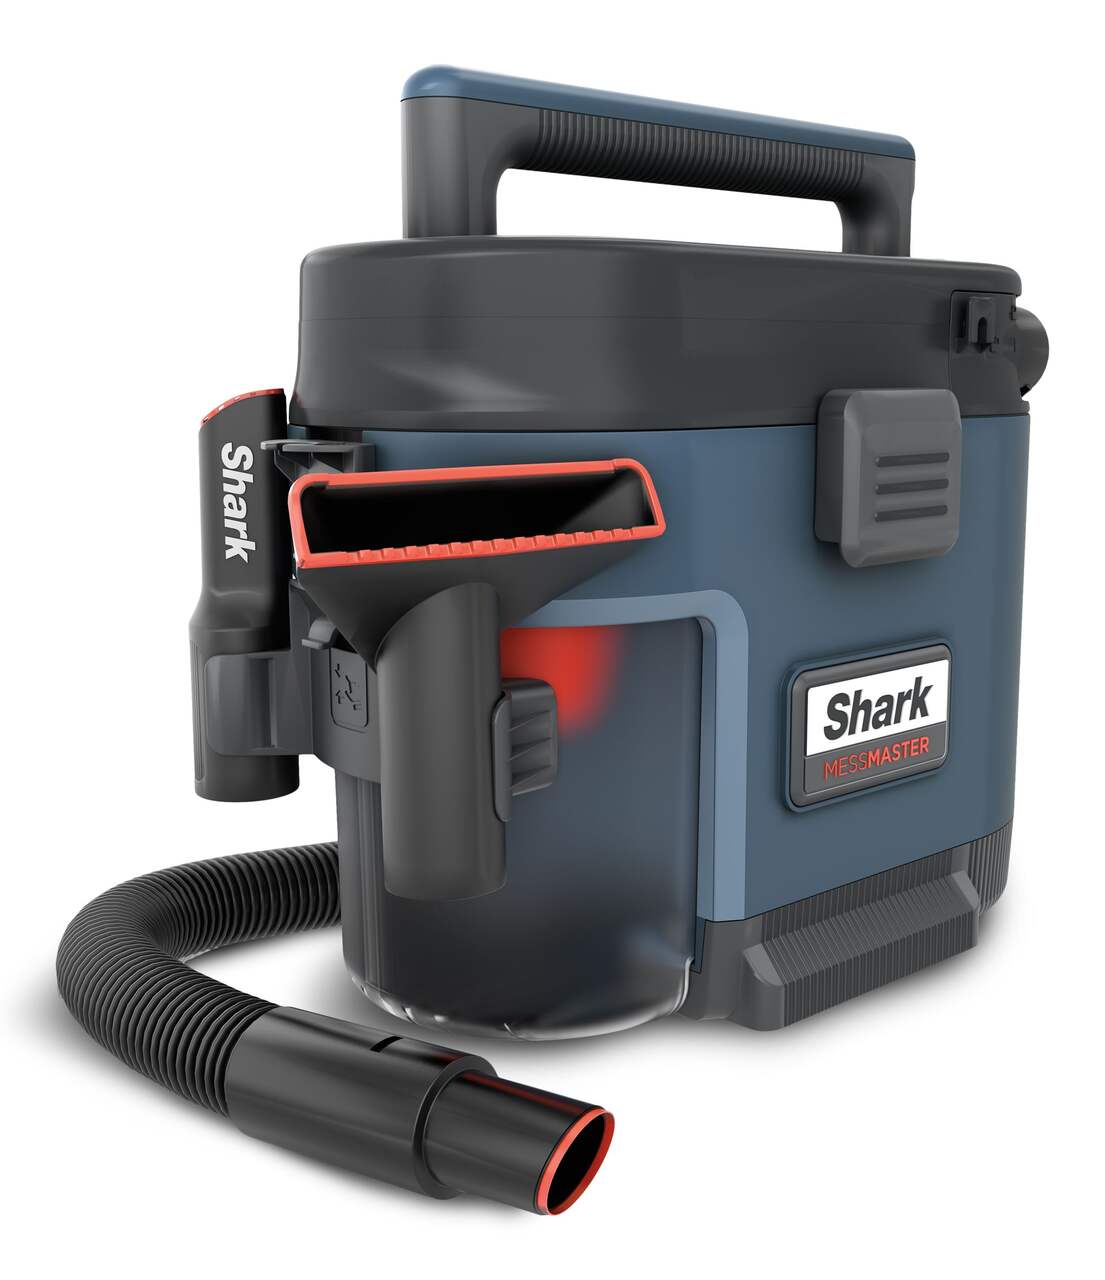 Shark MessMaster Portable Corded Wet/Dry Vacuum